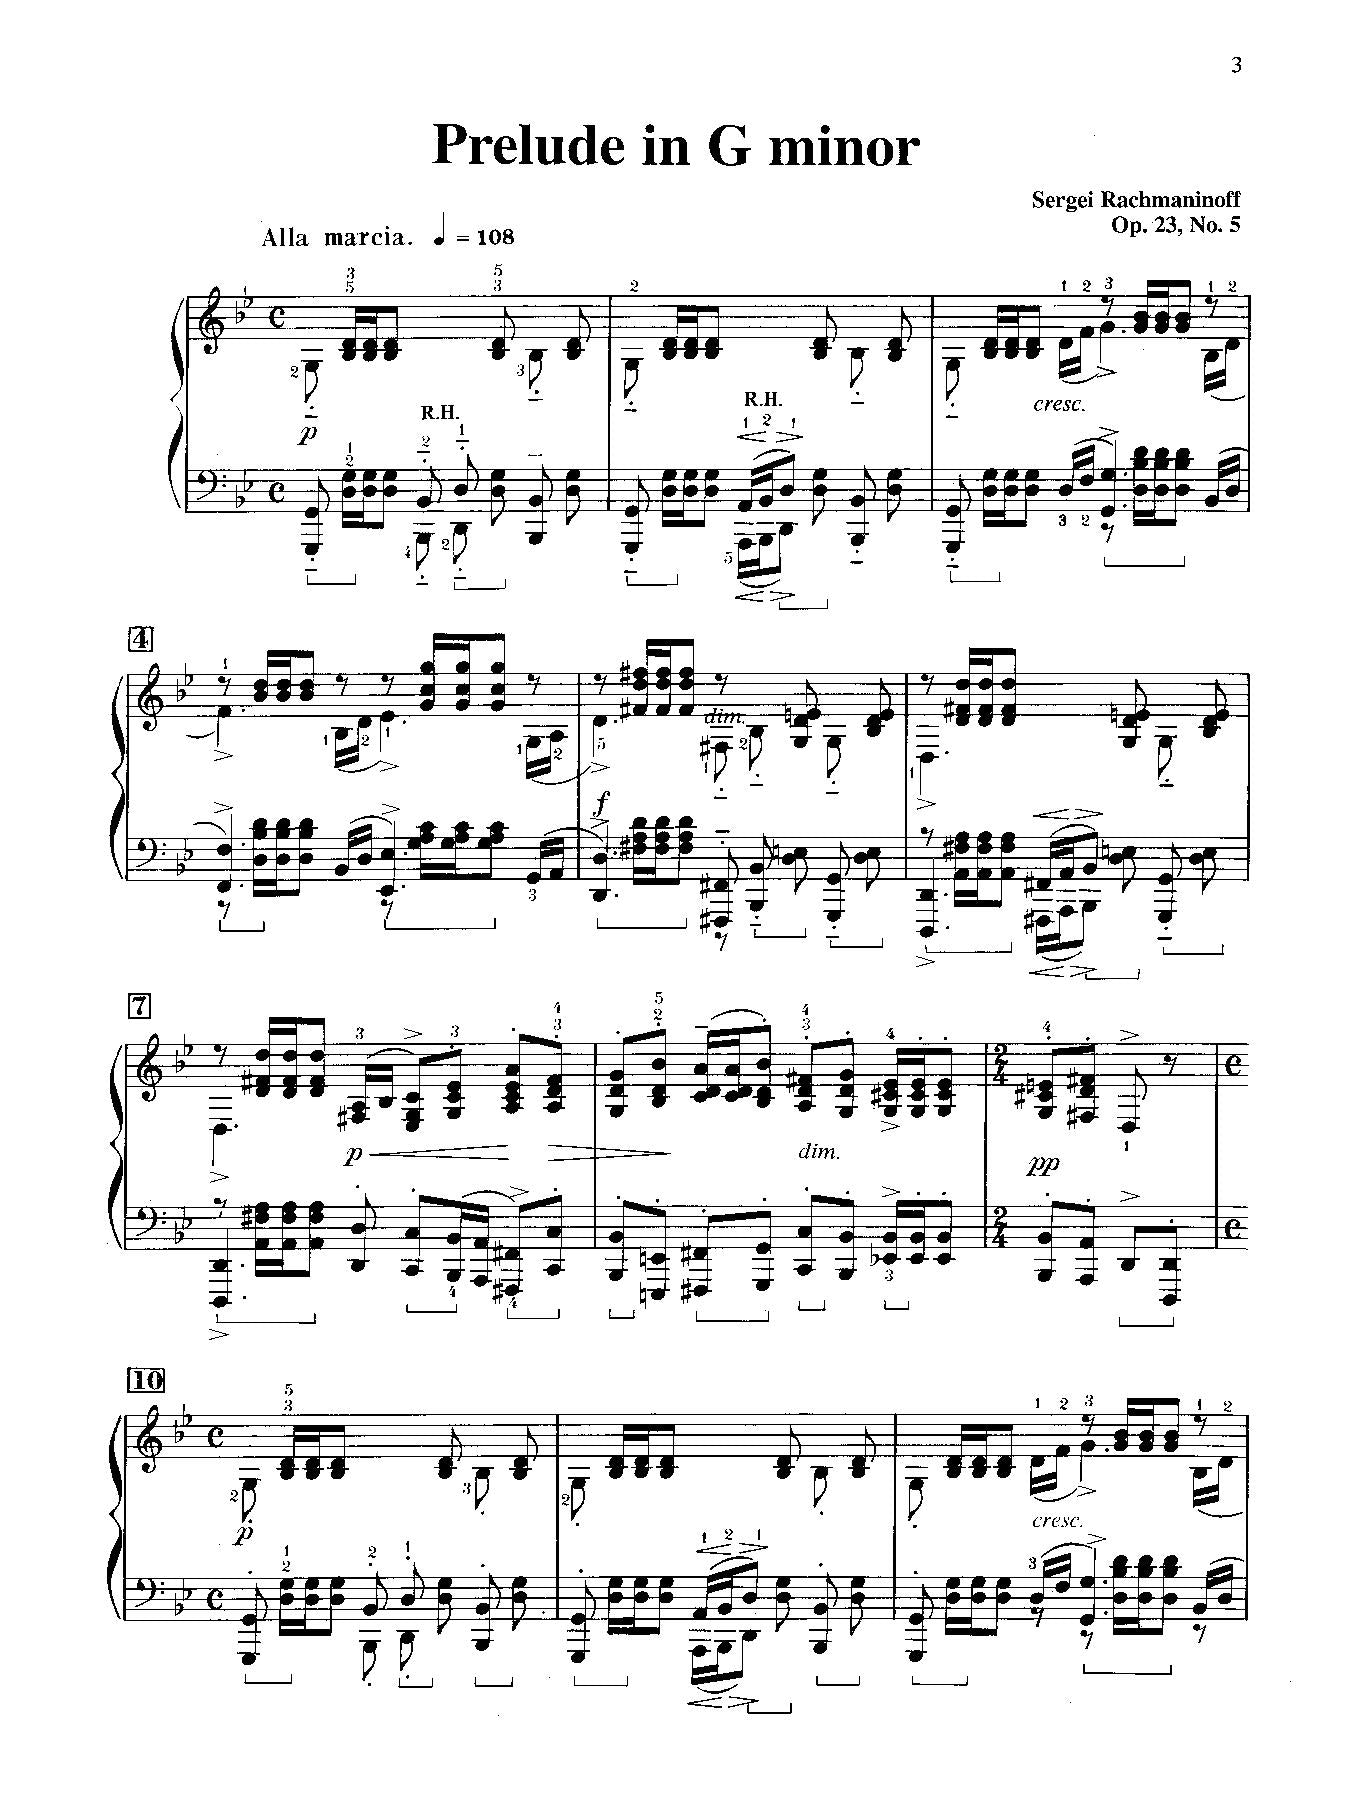 Rachmaninoff: Prelude in G Minor, Opus 23, No. 5